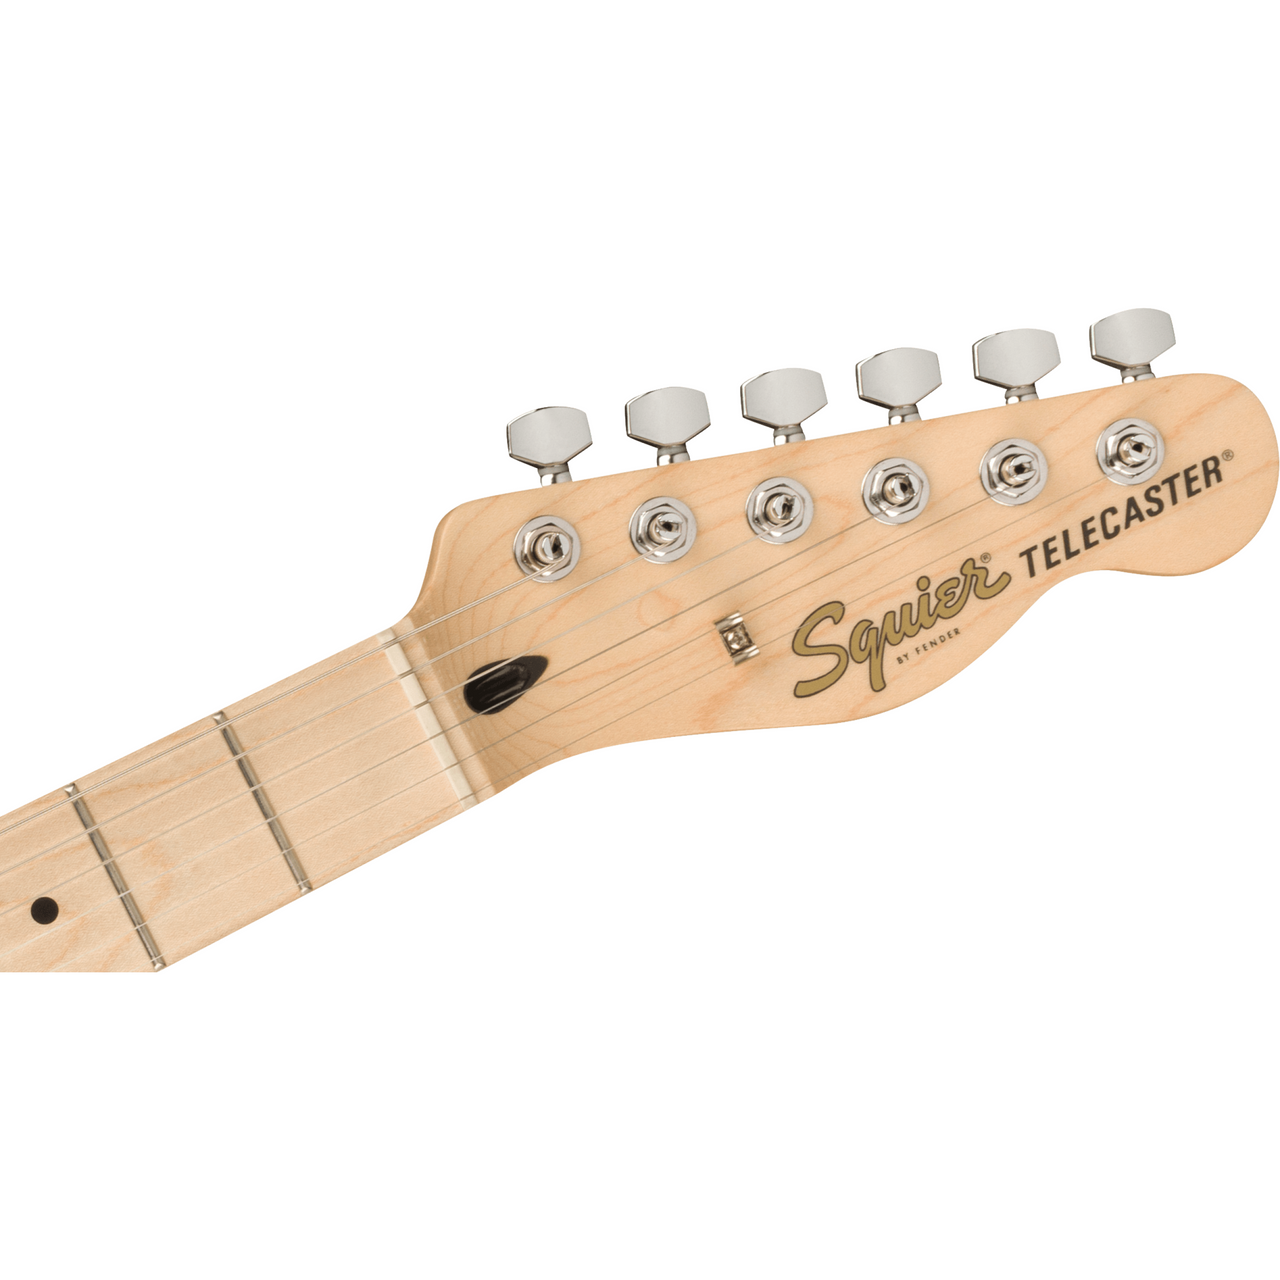 Guitarra Electrica Fender Affinity Series Telecaster Sunburst 0378203500